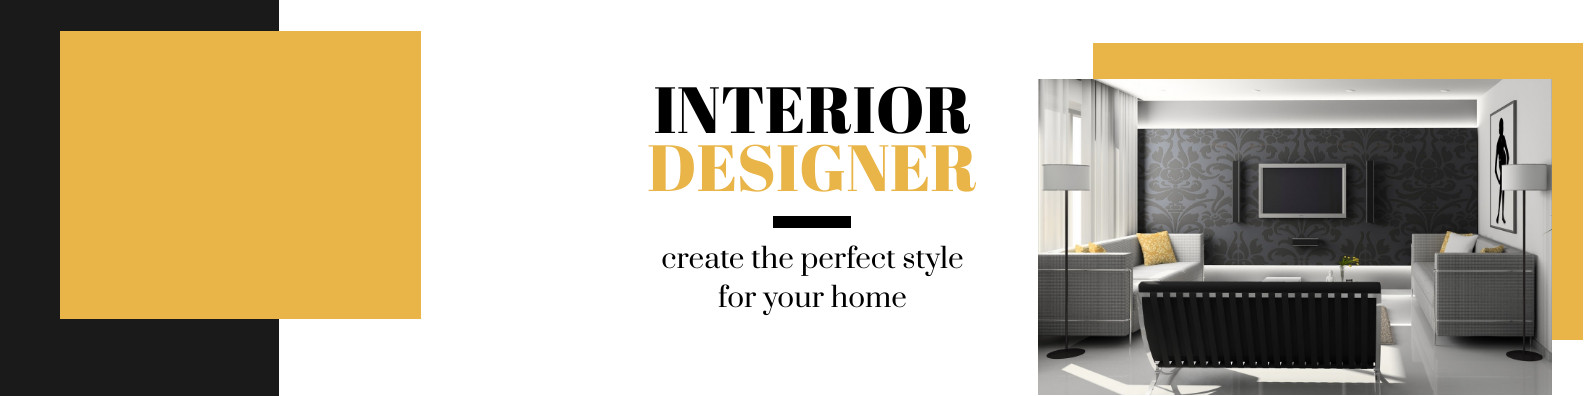 Perfect Style Interior Designer Linkedin Profile BG